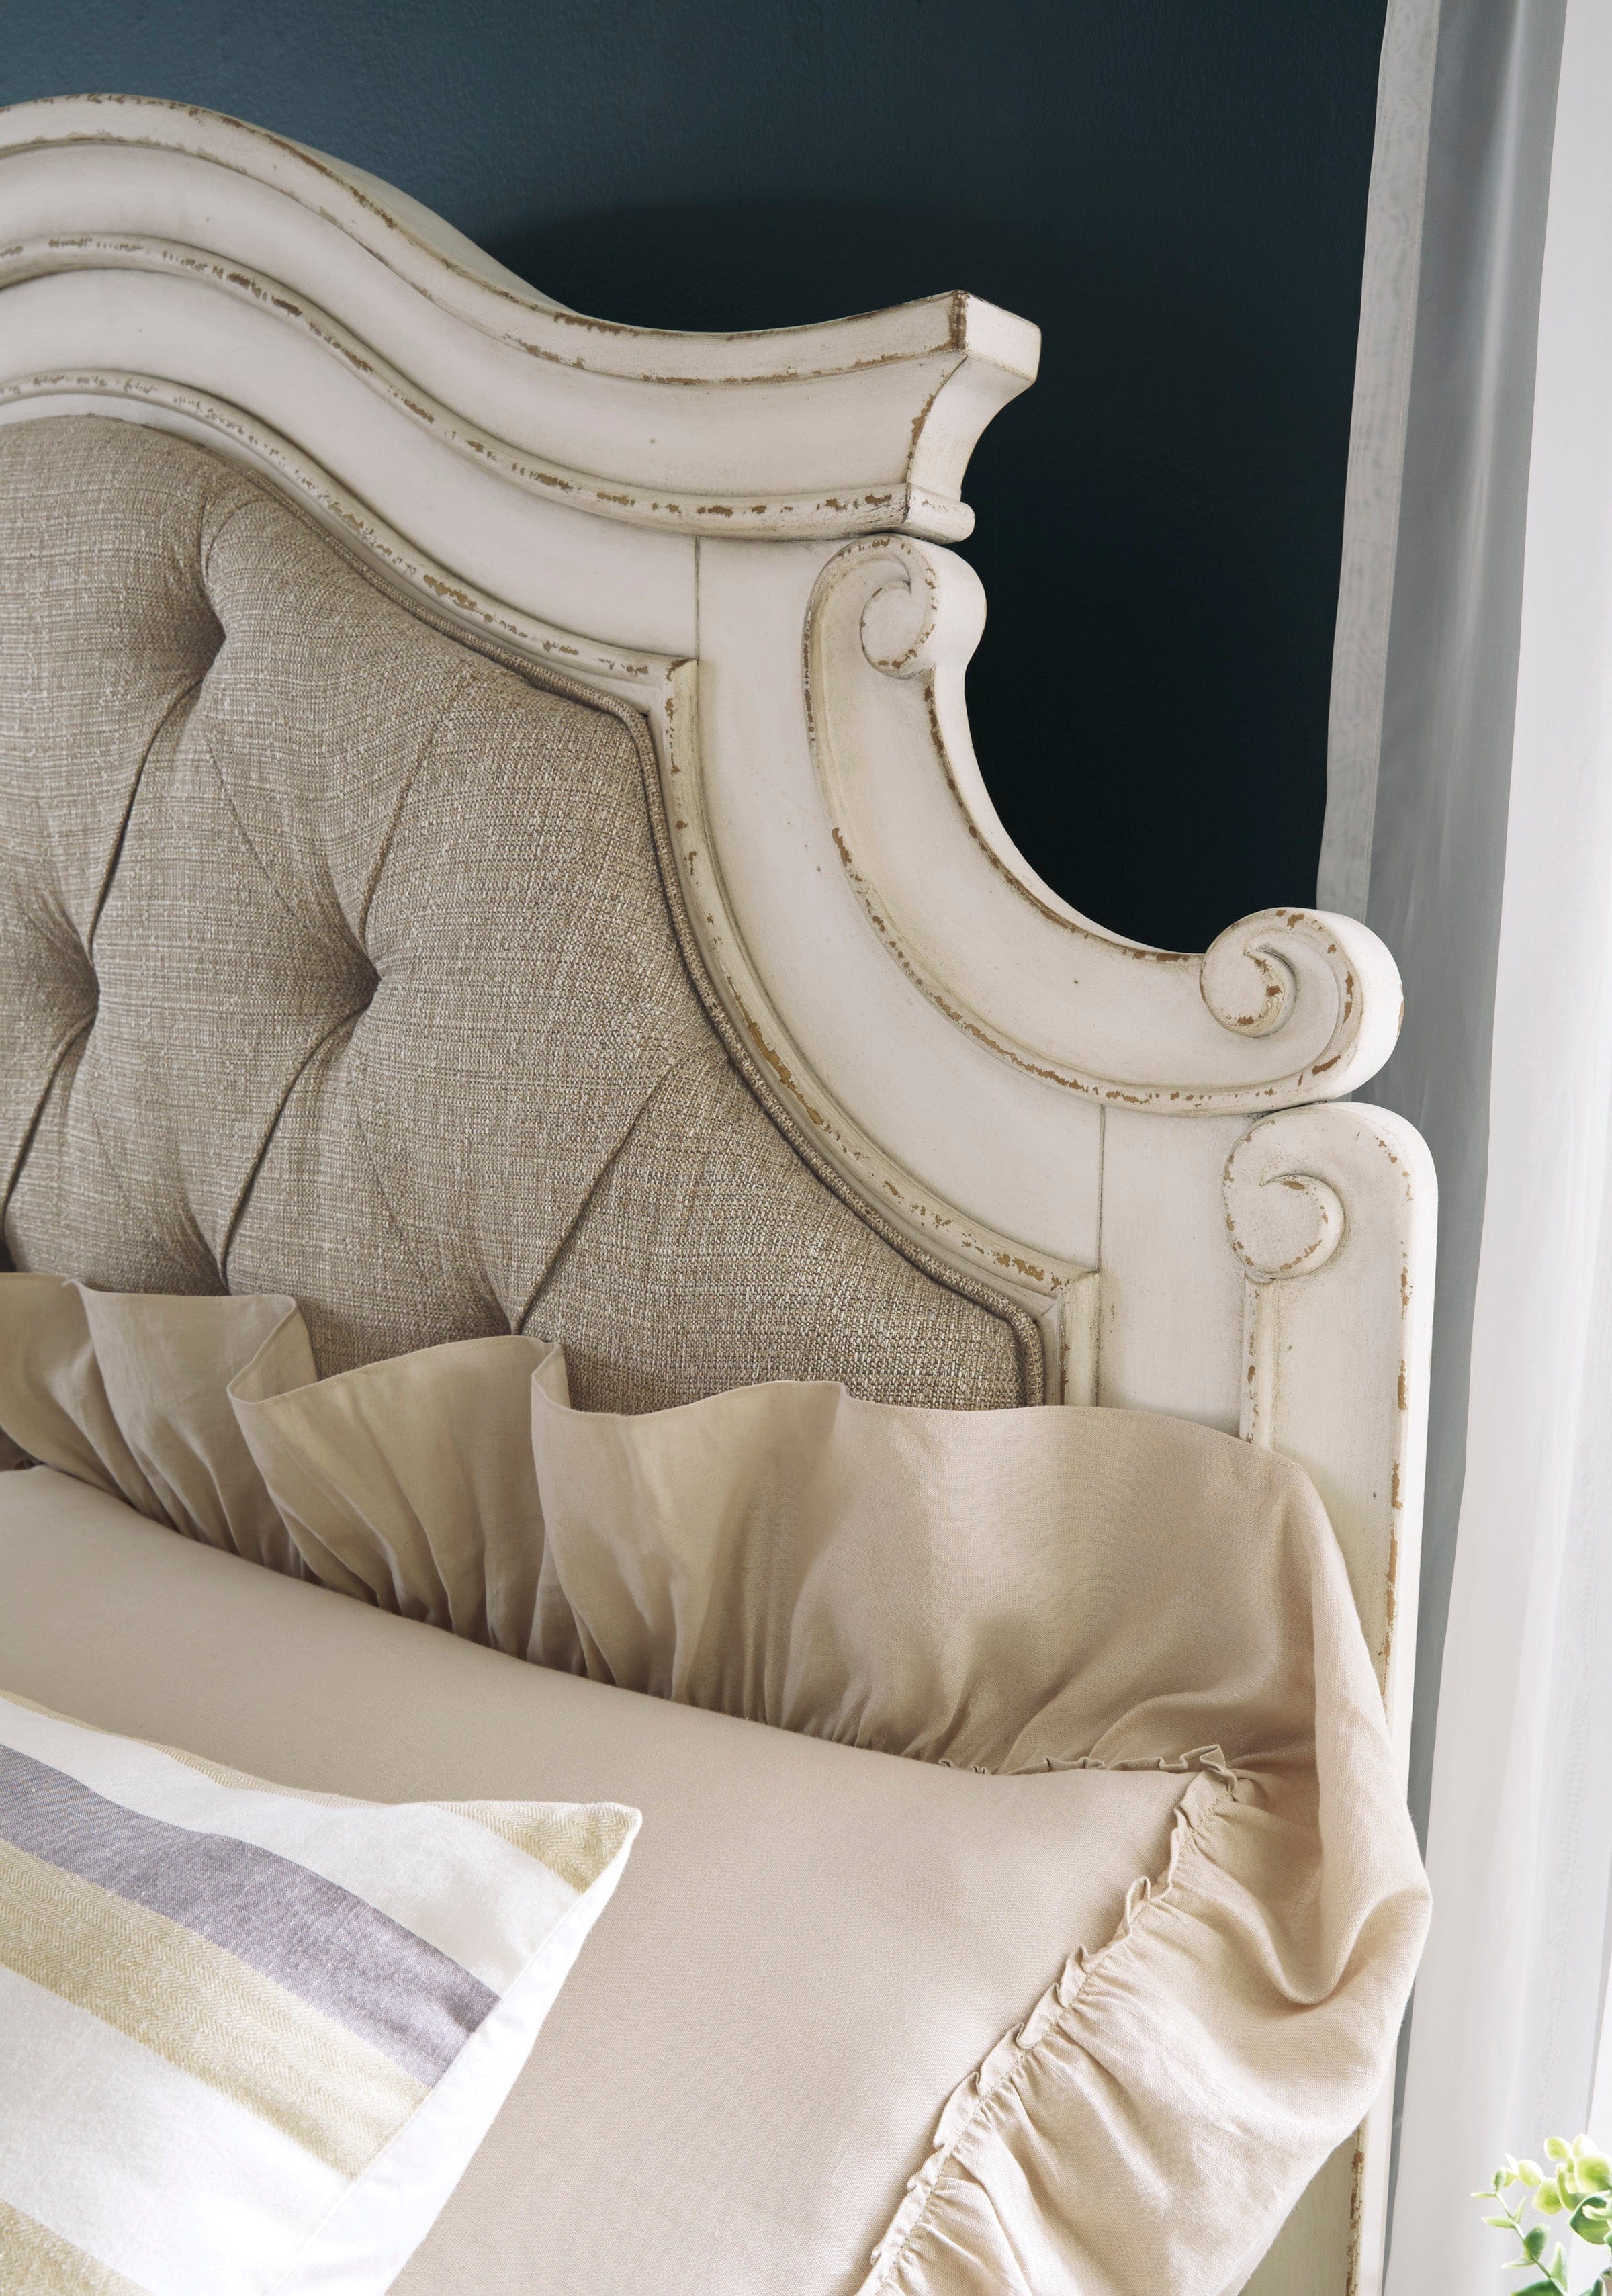 Realyn Chipped White Upholstered Panel Bedroom Set - Decohub Home